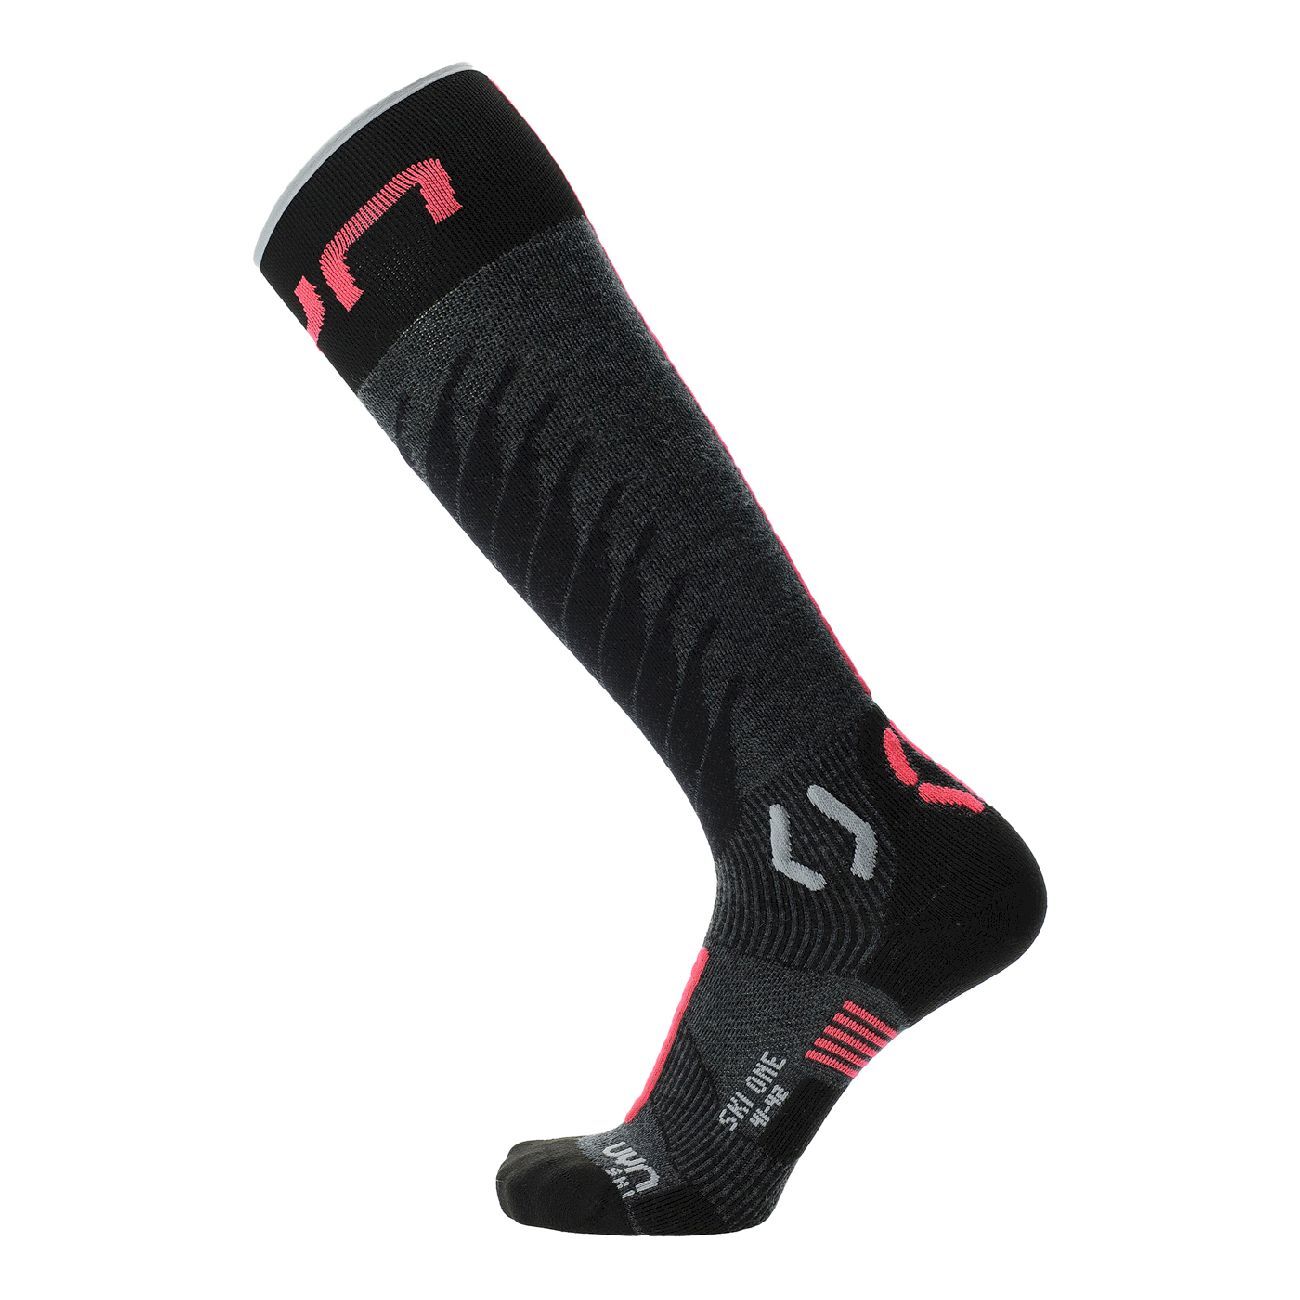 Uyn Ski One Merino Socks - Ski socks - Women's